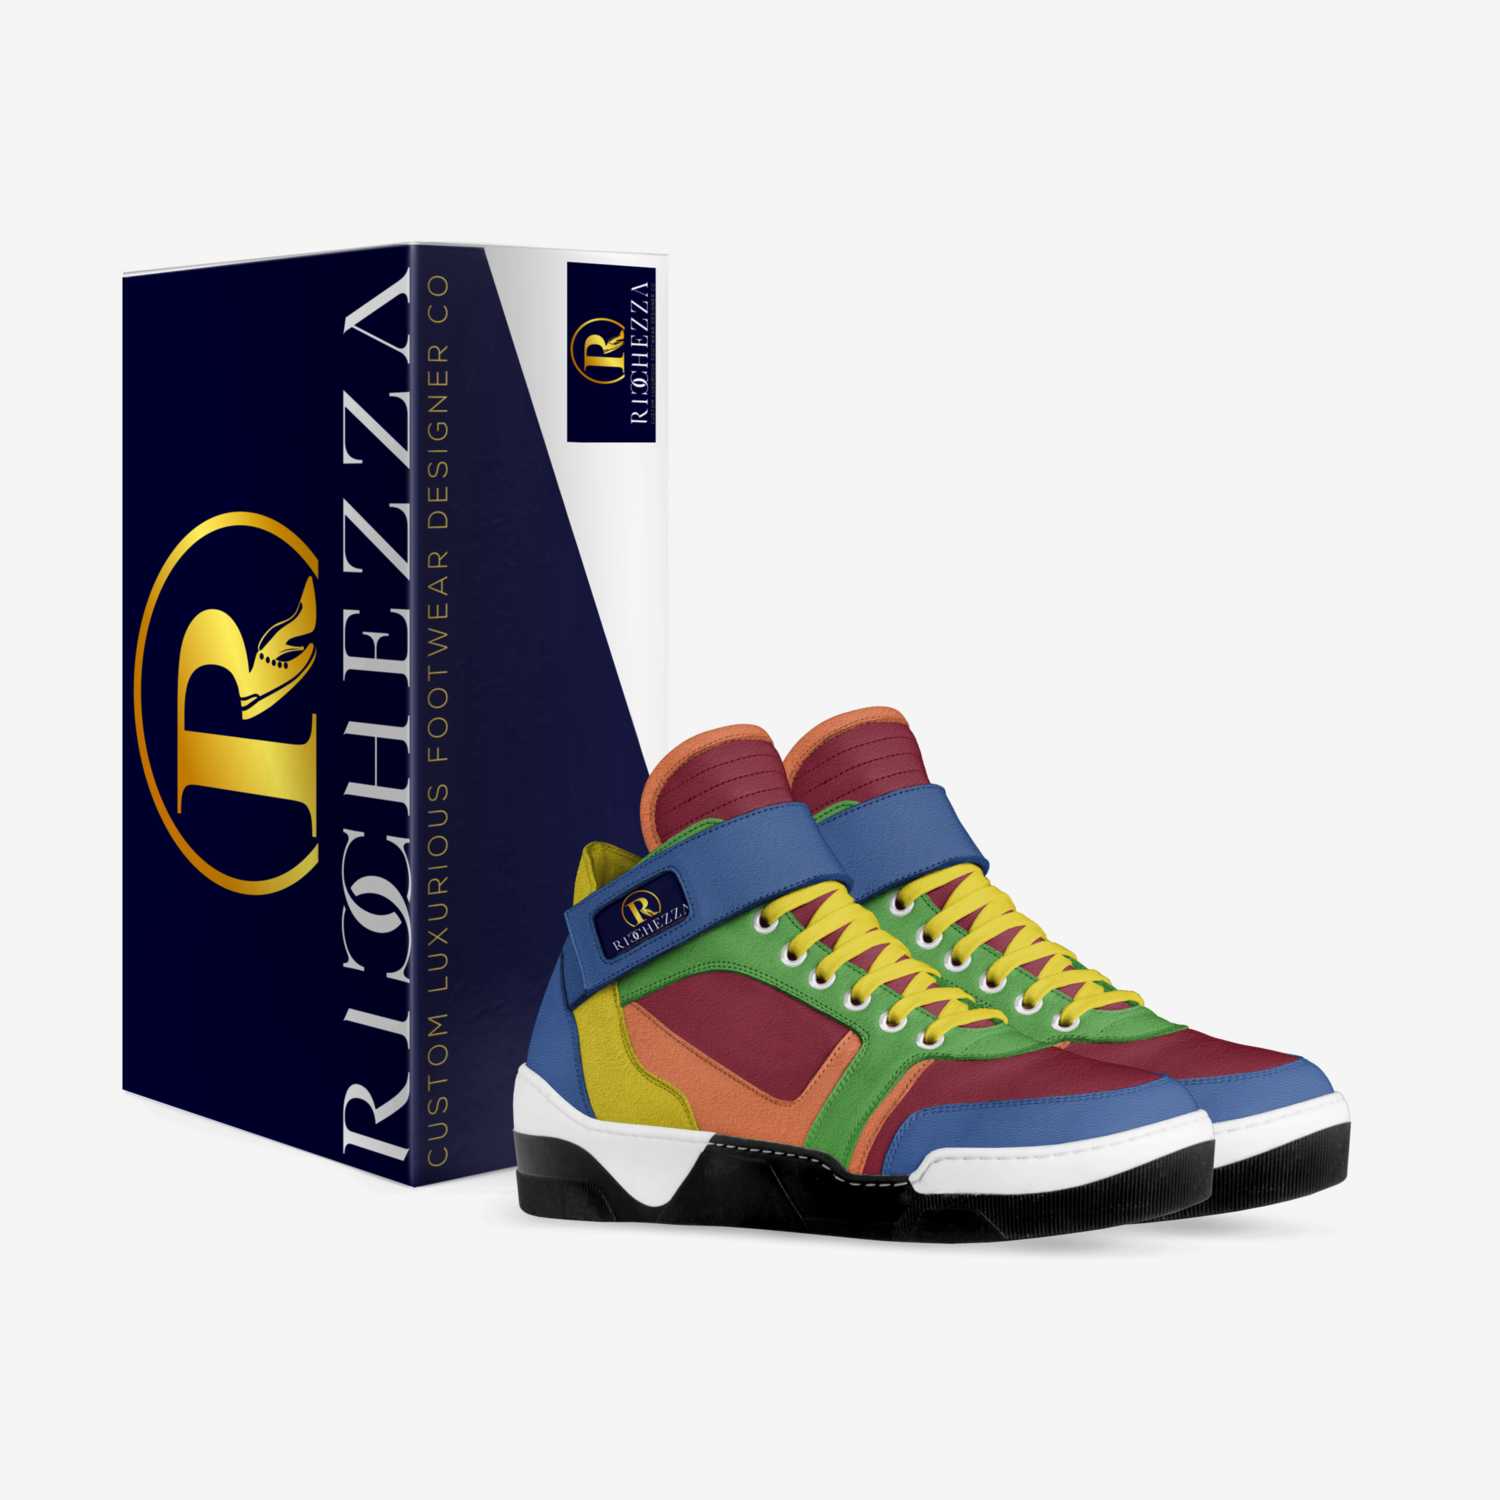 Zuu  Walka custom made in Italy shoes by Ricchezza Custom Footwear Designer Co. | Box view